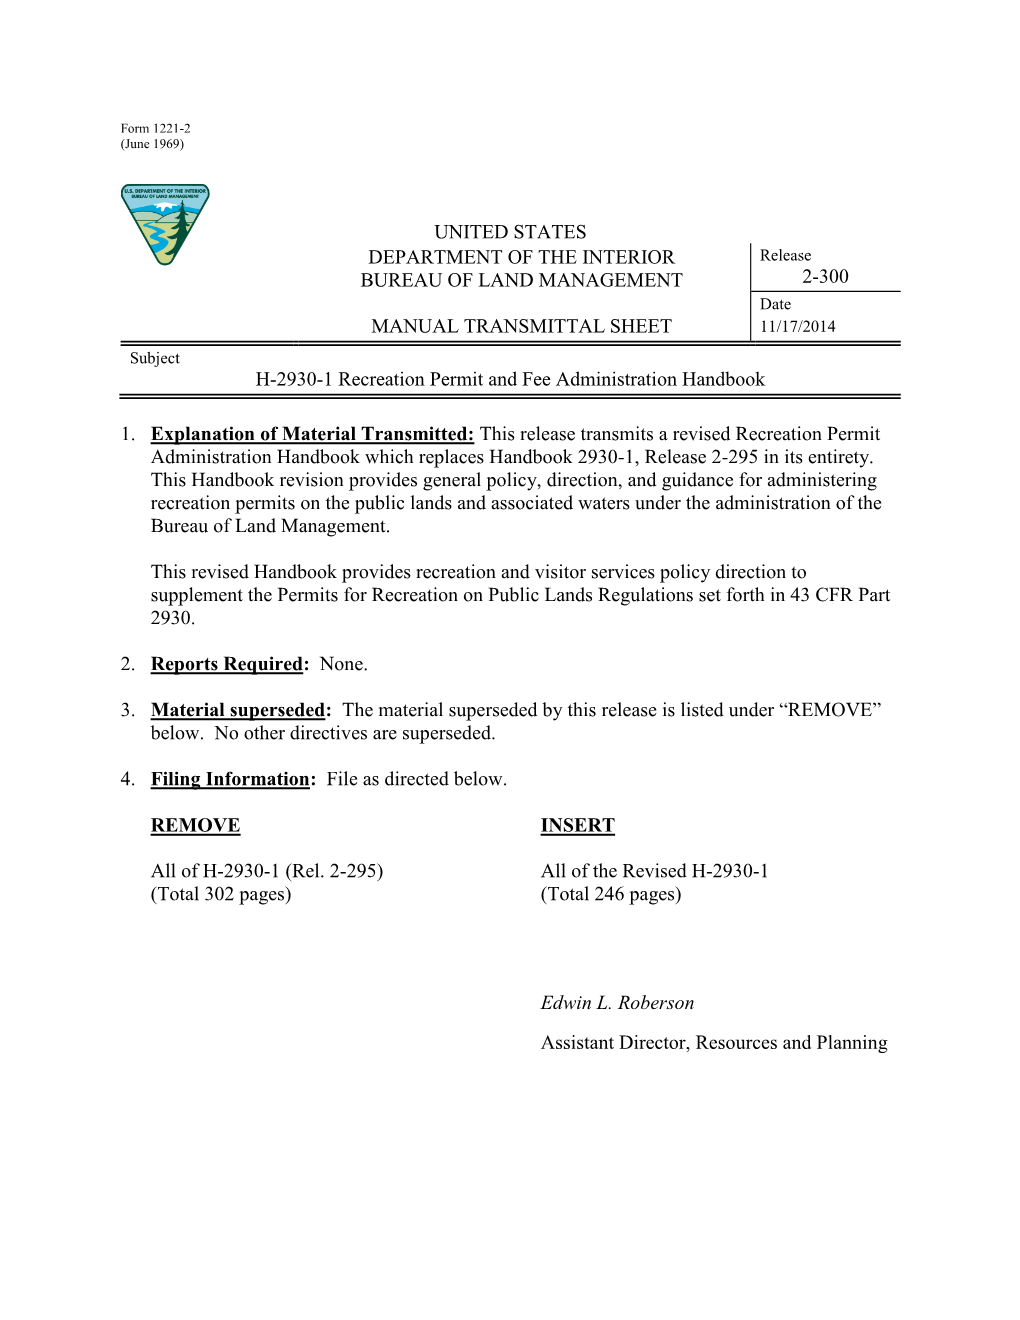 H-2930-1, Recreation Permit Administration